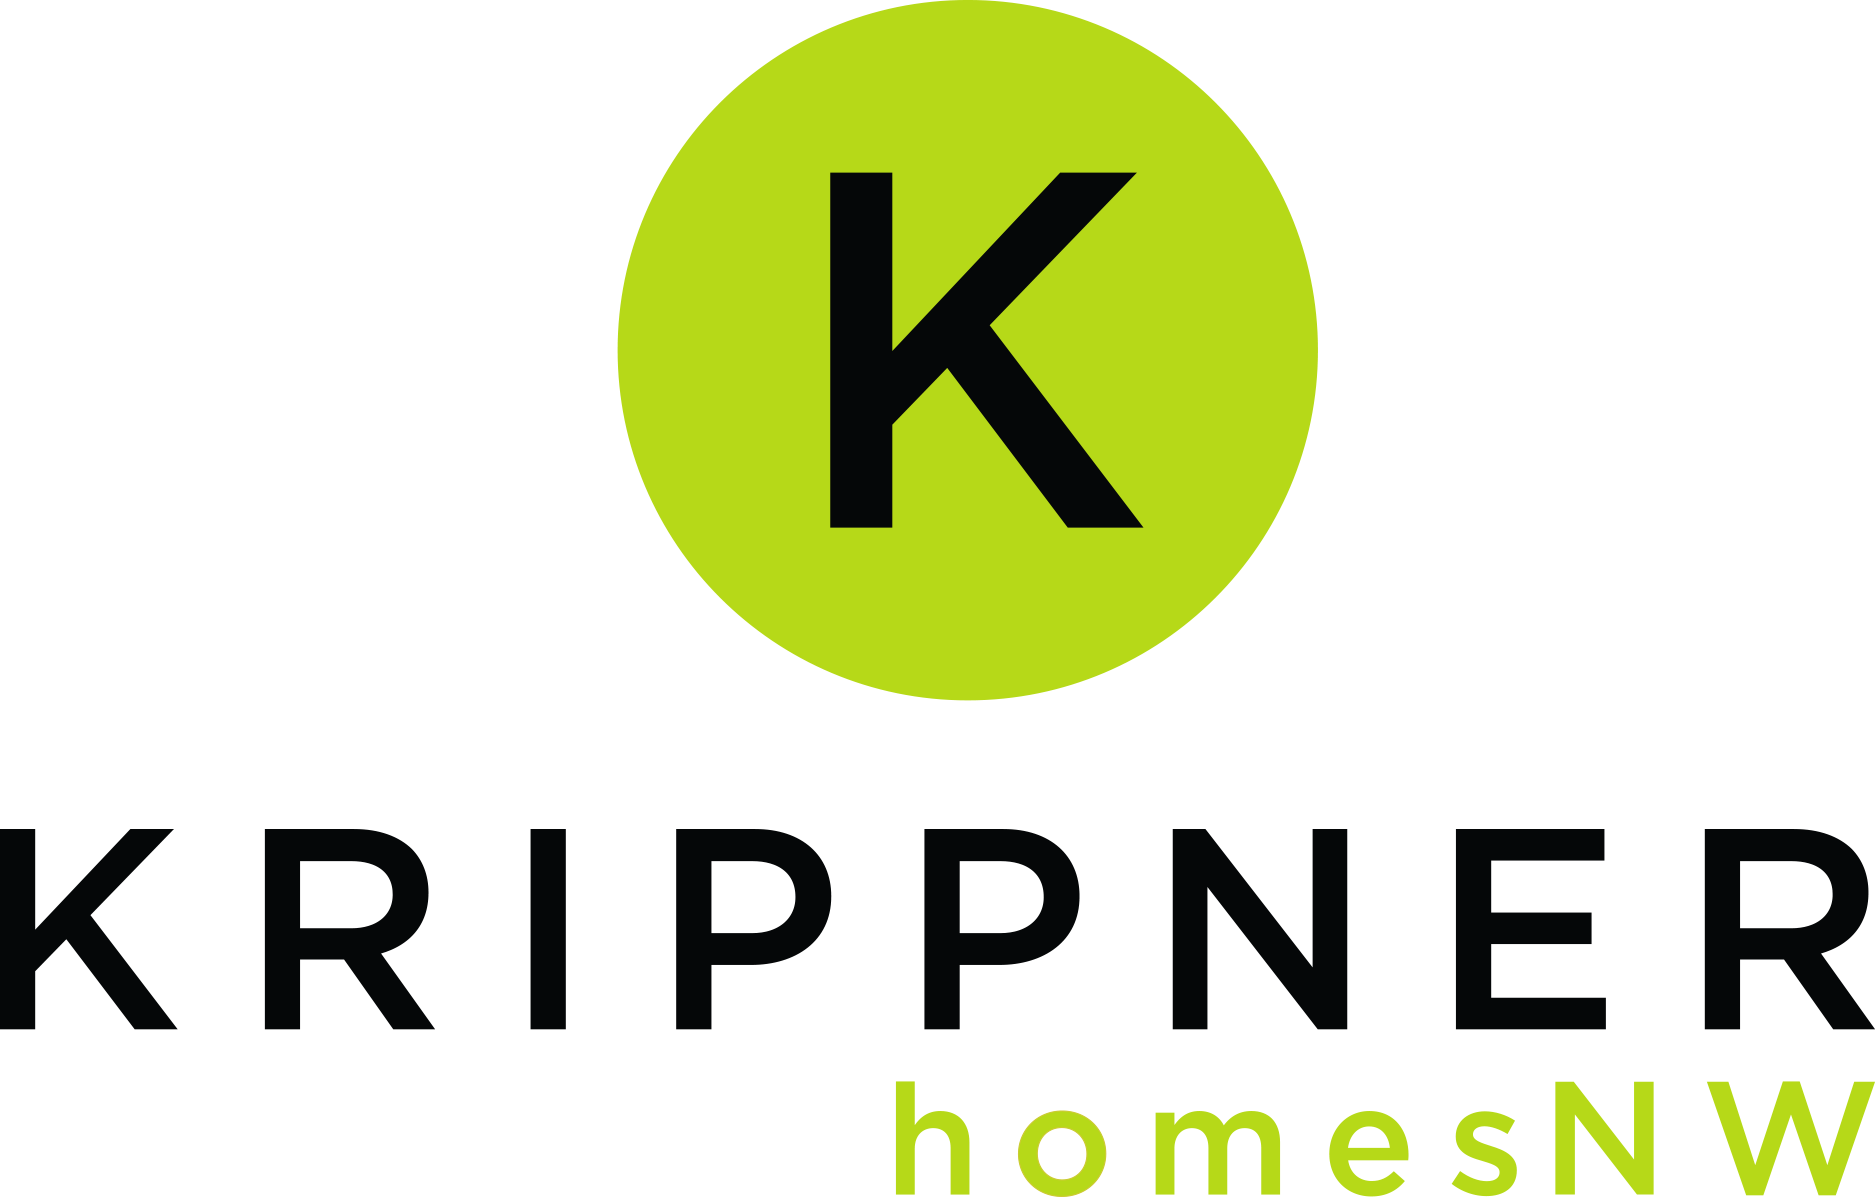 Krippner Homes NW